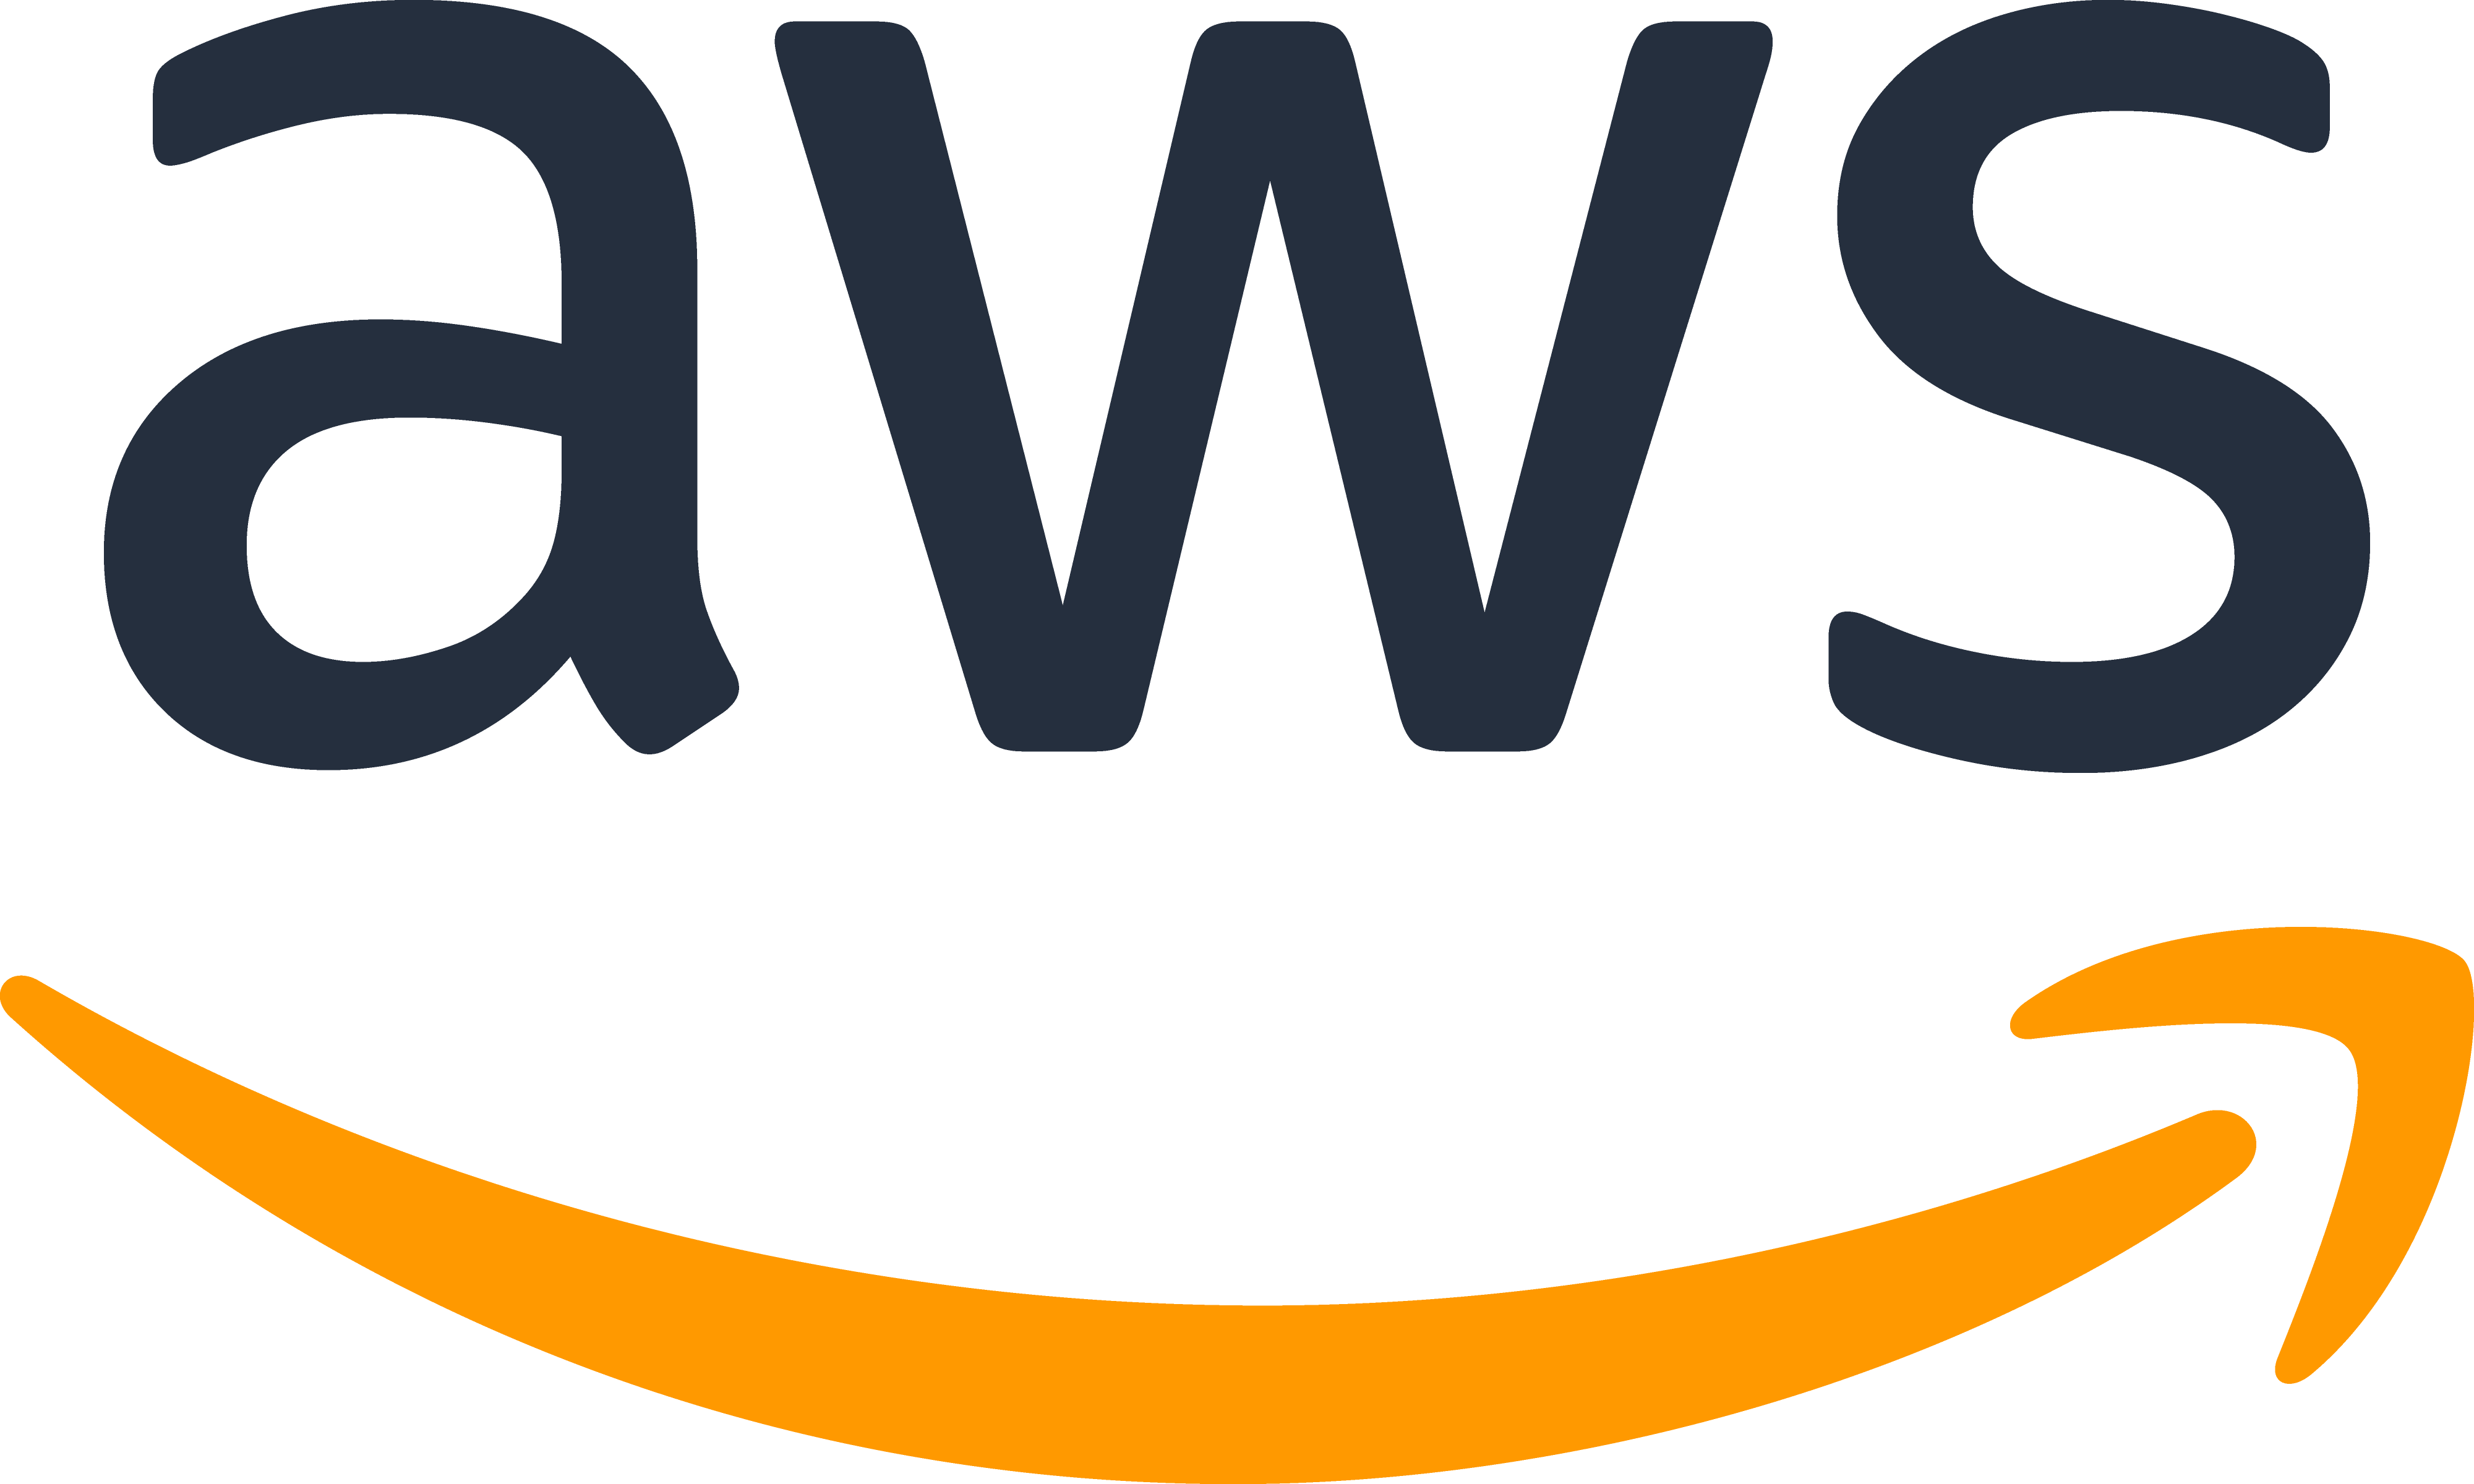 Amazon AWS Logo PNG Image in Transparent